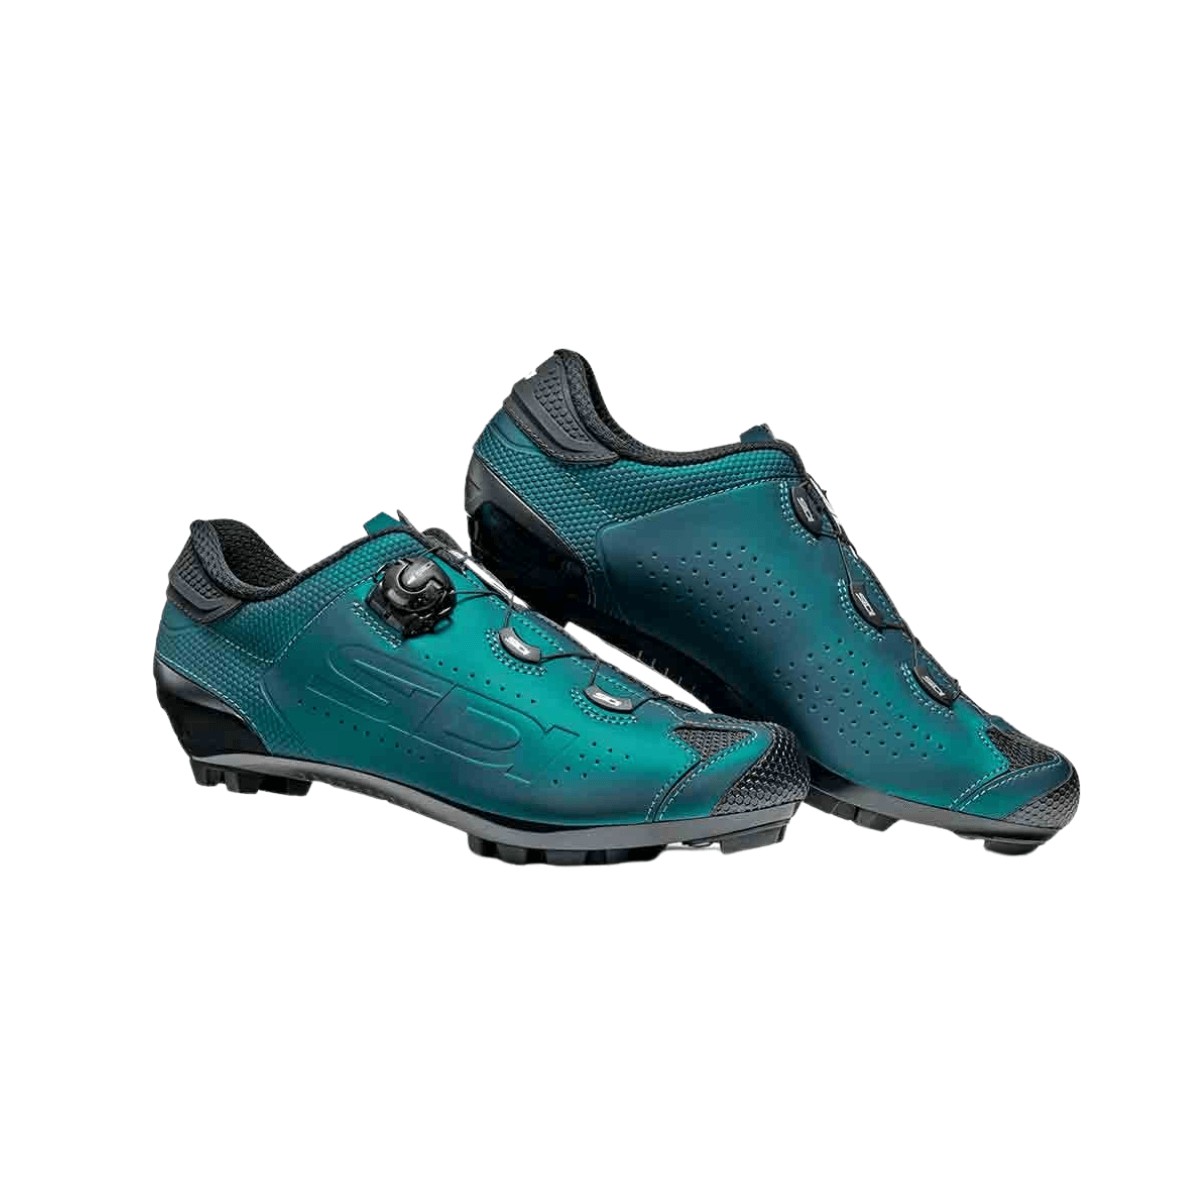 Shoes Sidi MTB Dust Green Blue AW22, Size 41 - EUR